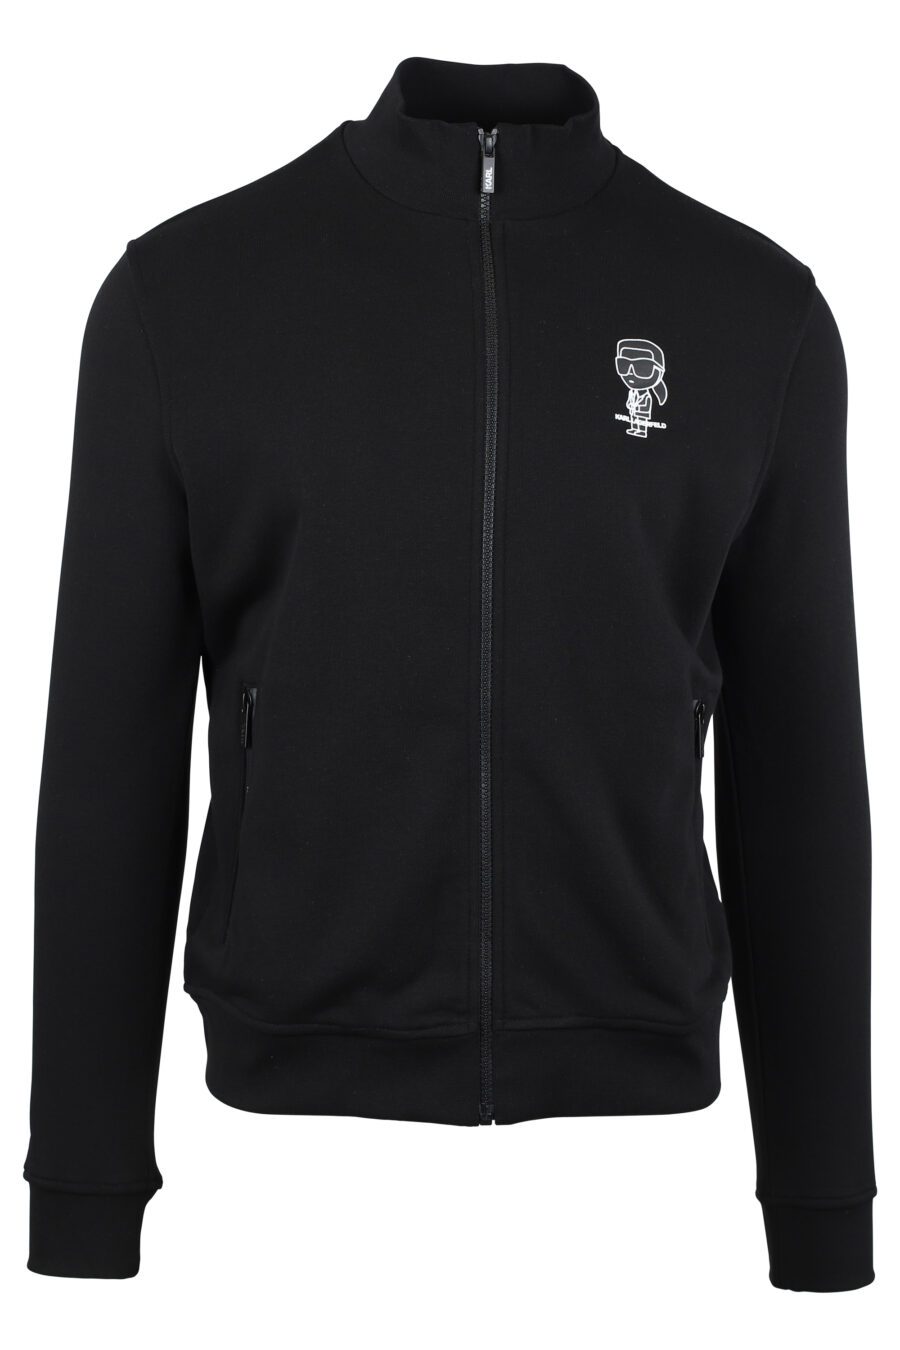 Black sweatshirt with zip and "karl" logo in white silhouette - IMG 4626